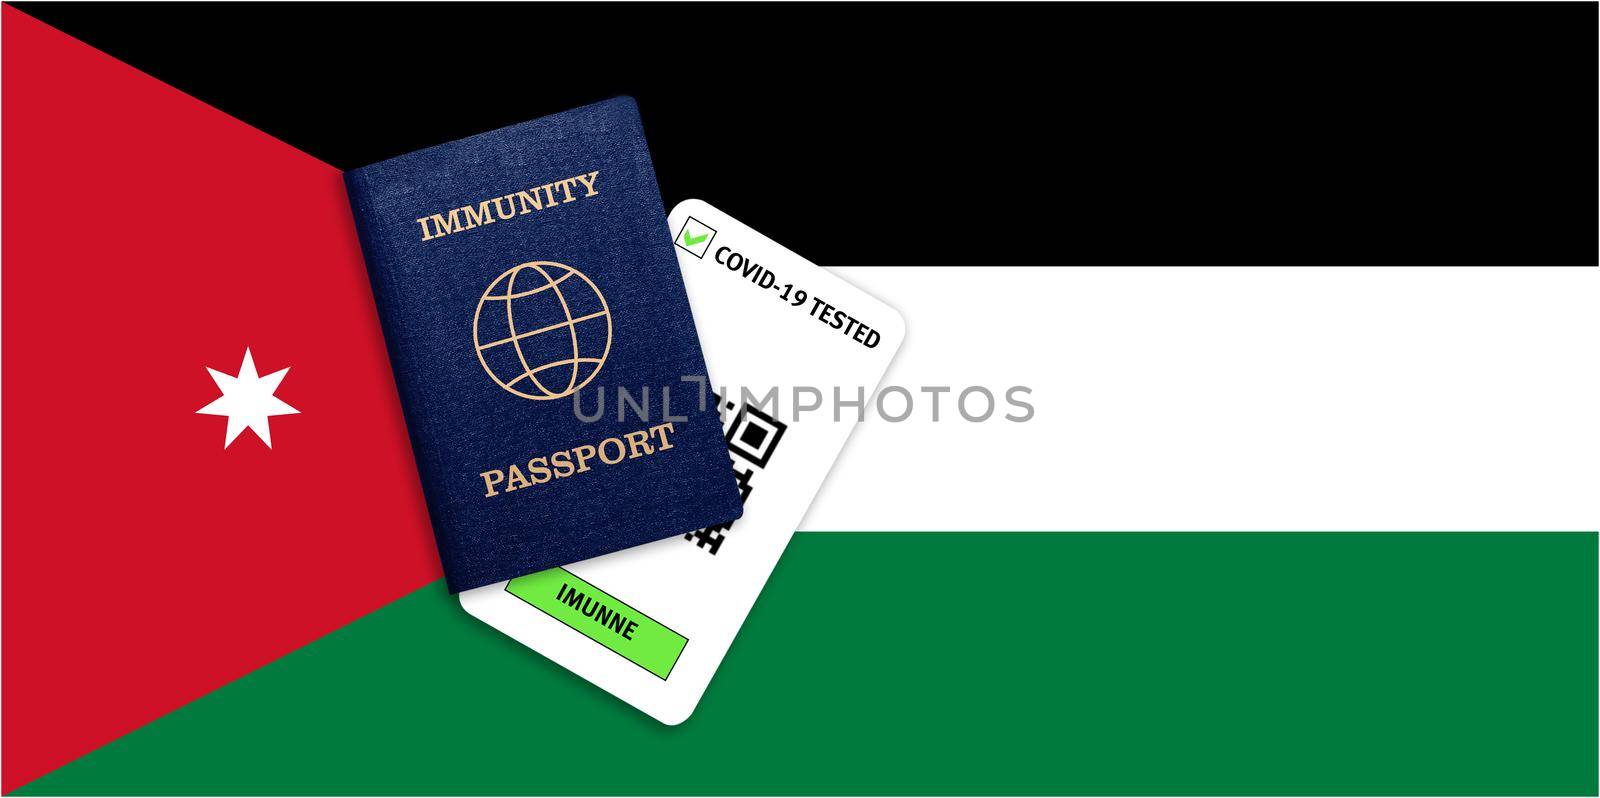 Immunity passport and test result for COVID-19 on flag of Jordan by galinasharapova